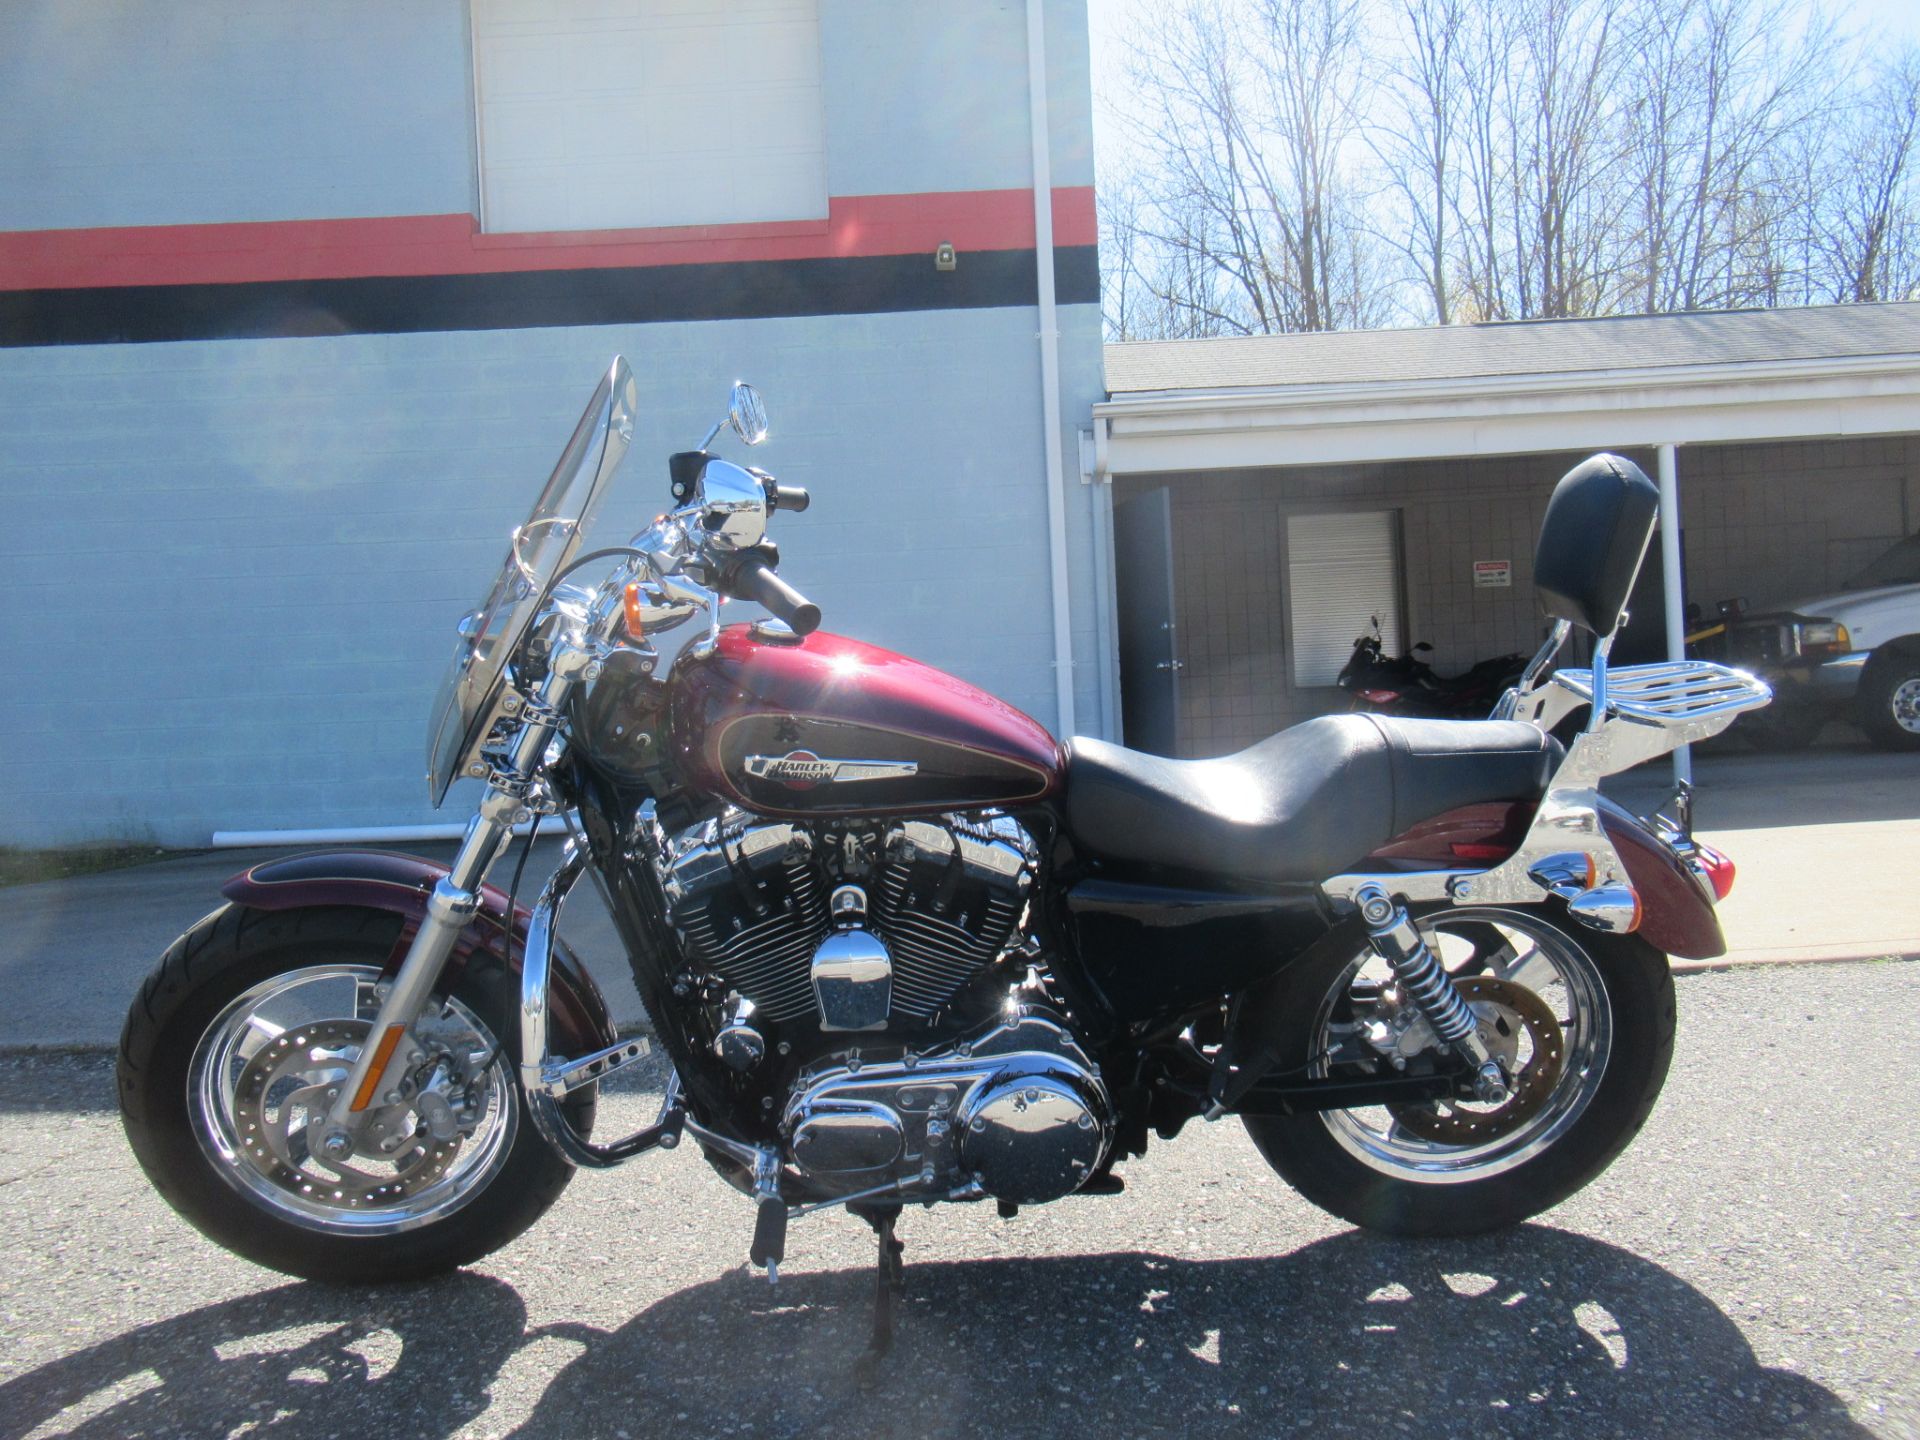 2015 Harley-Davidson 1200 Custom in Springfield, Massachusetts - Photo 5